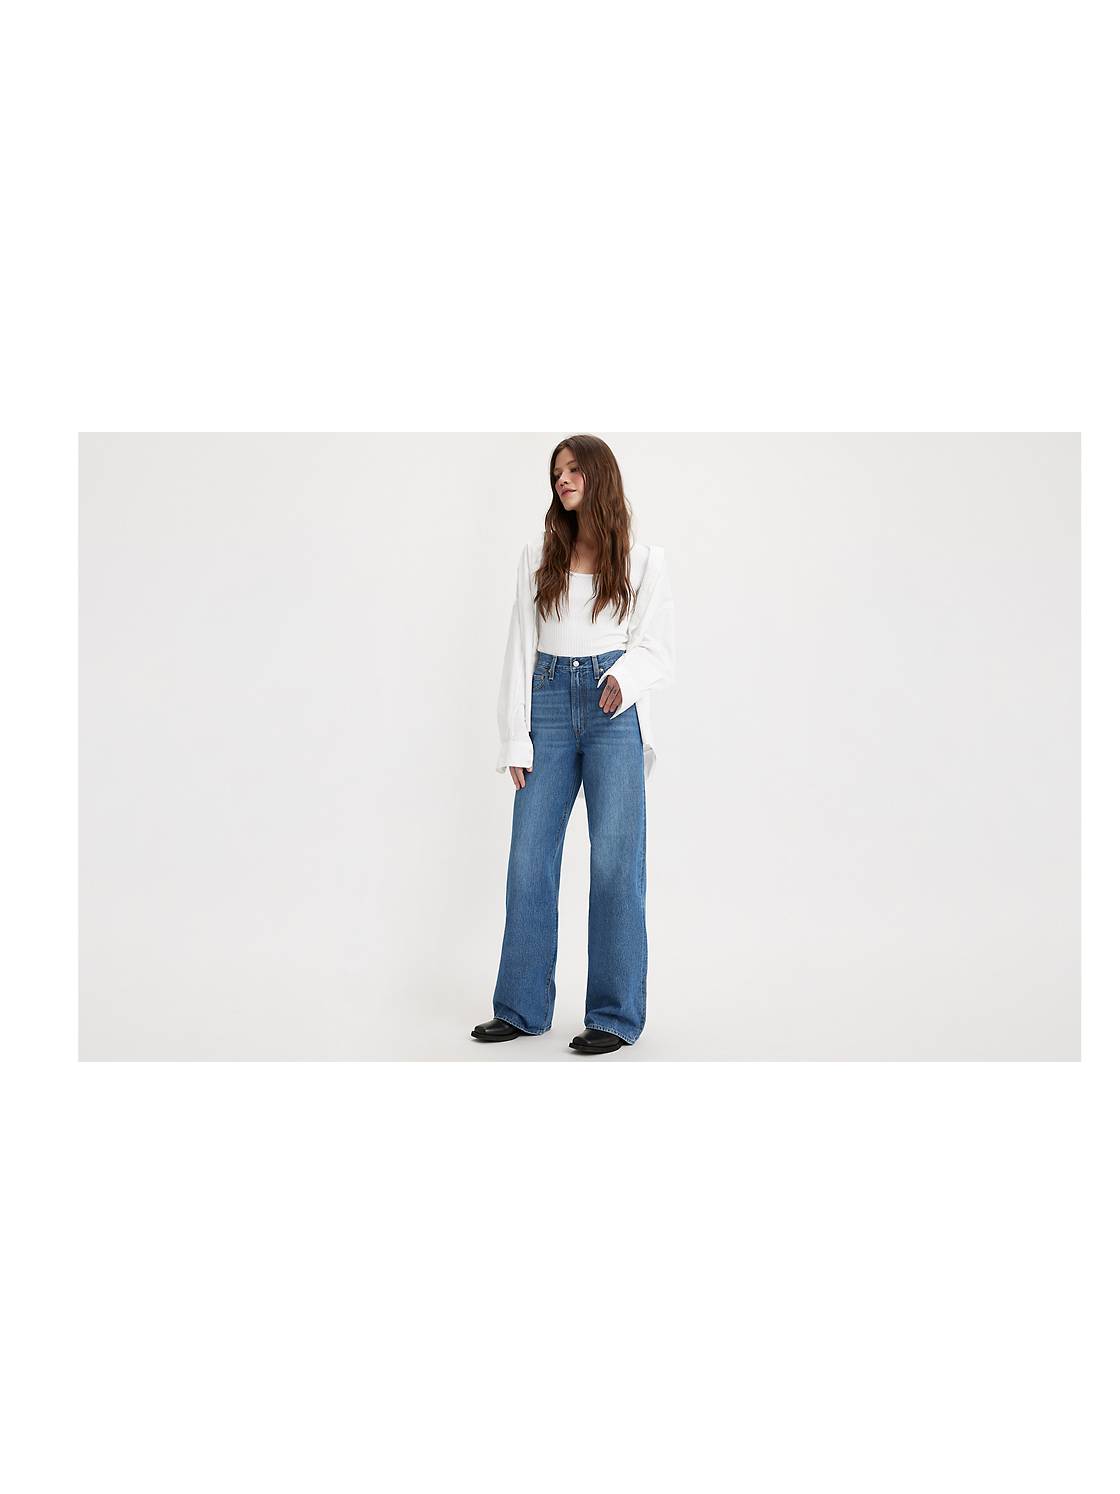 Sonoma mid rise jeans  Mid rise jeans, Women jeans, Clothes design